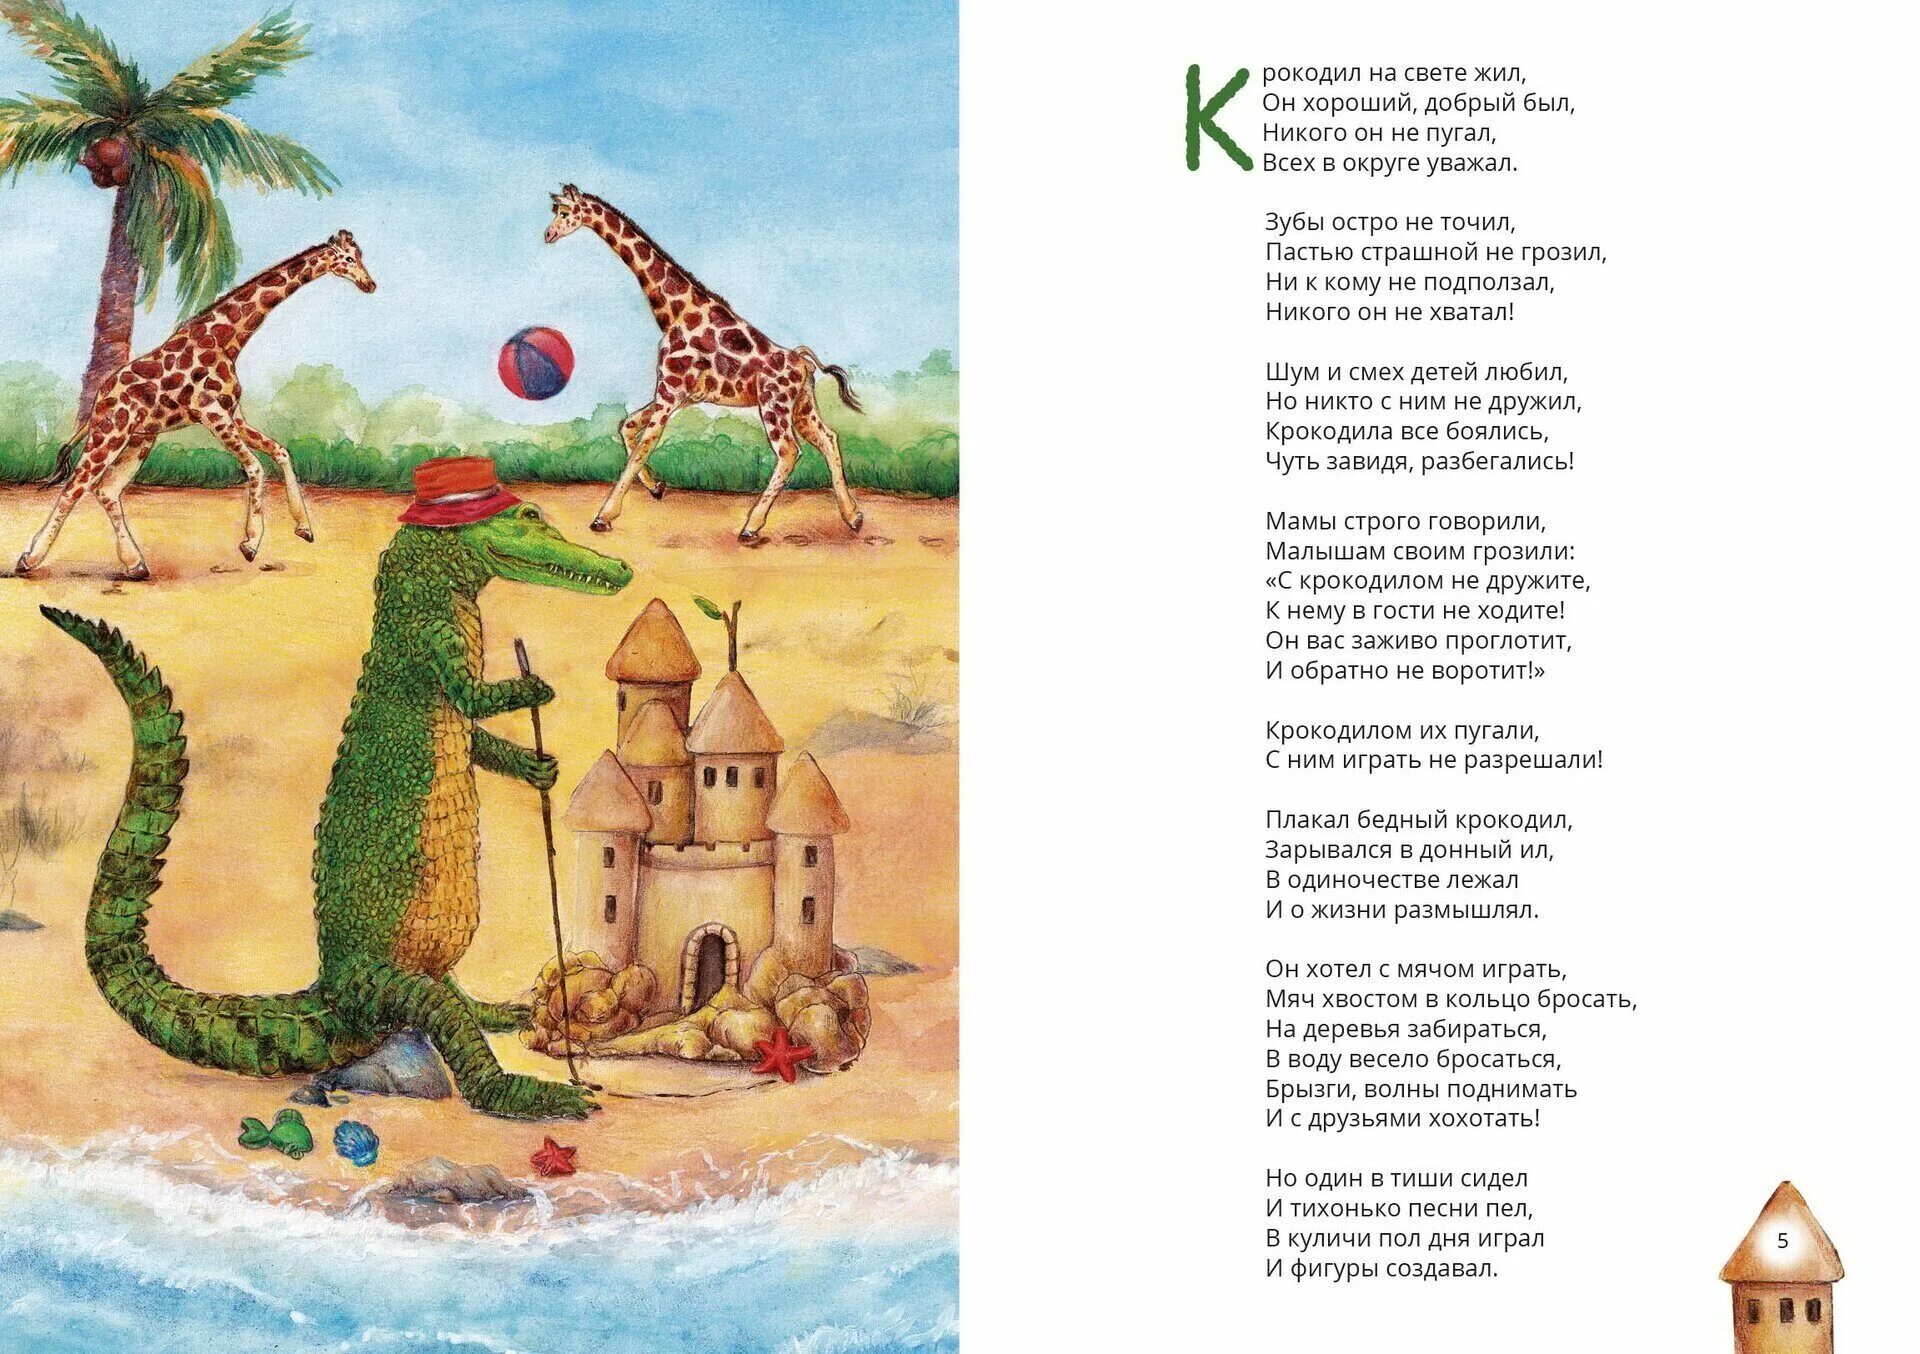 Песня про крокодила текст. Стих про крокодила для детей. Загадка про крокодила. Песенки детские про крокодила. Крокодил сказка.